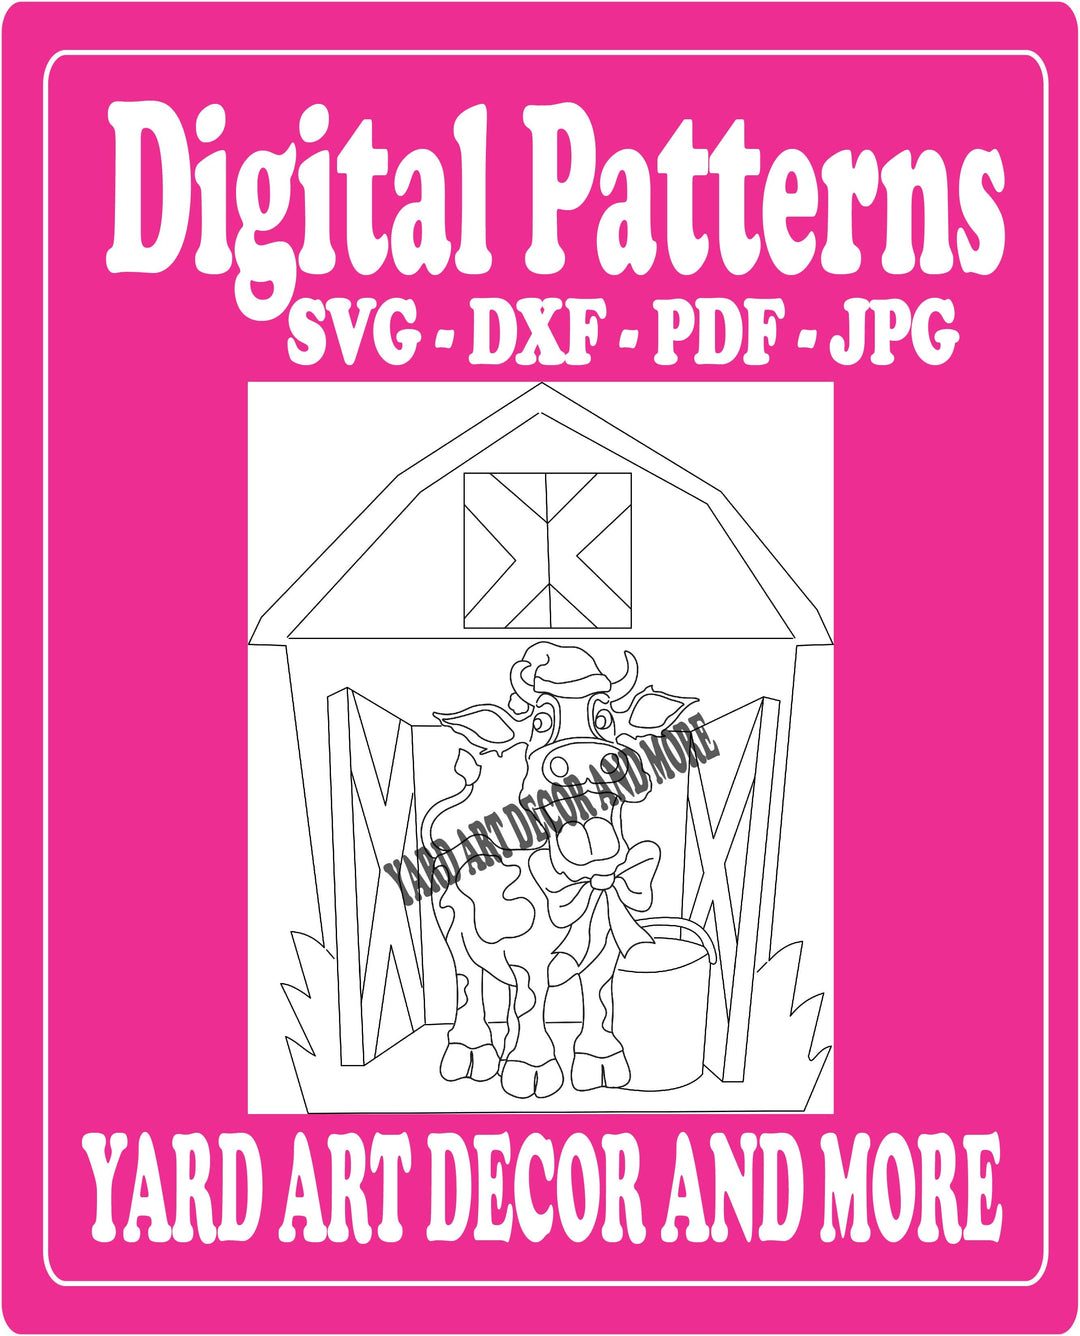 Christmas Cow Barn with Window Yard Art - SVG - DXF - PDF - JPG Files